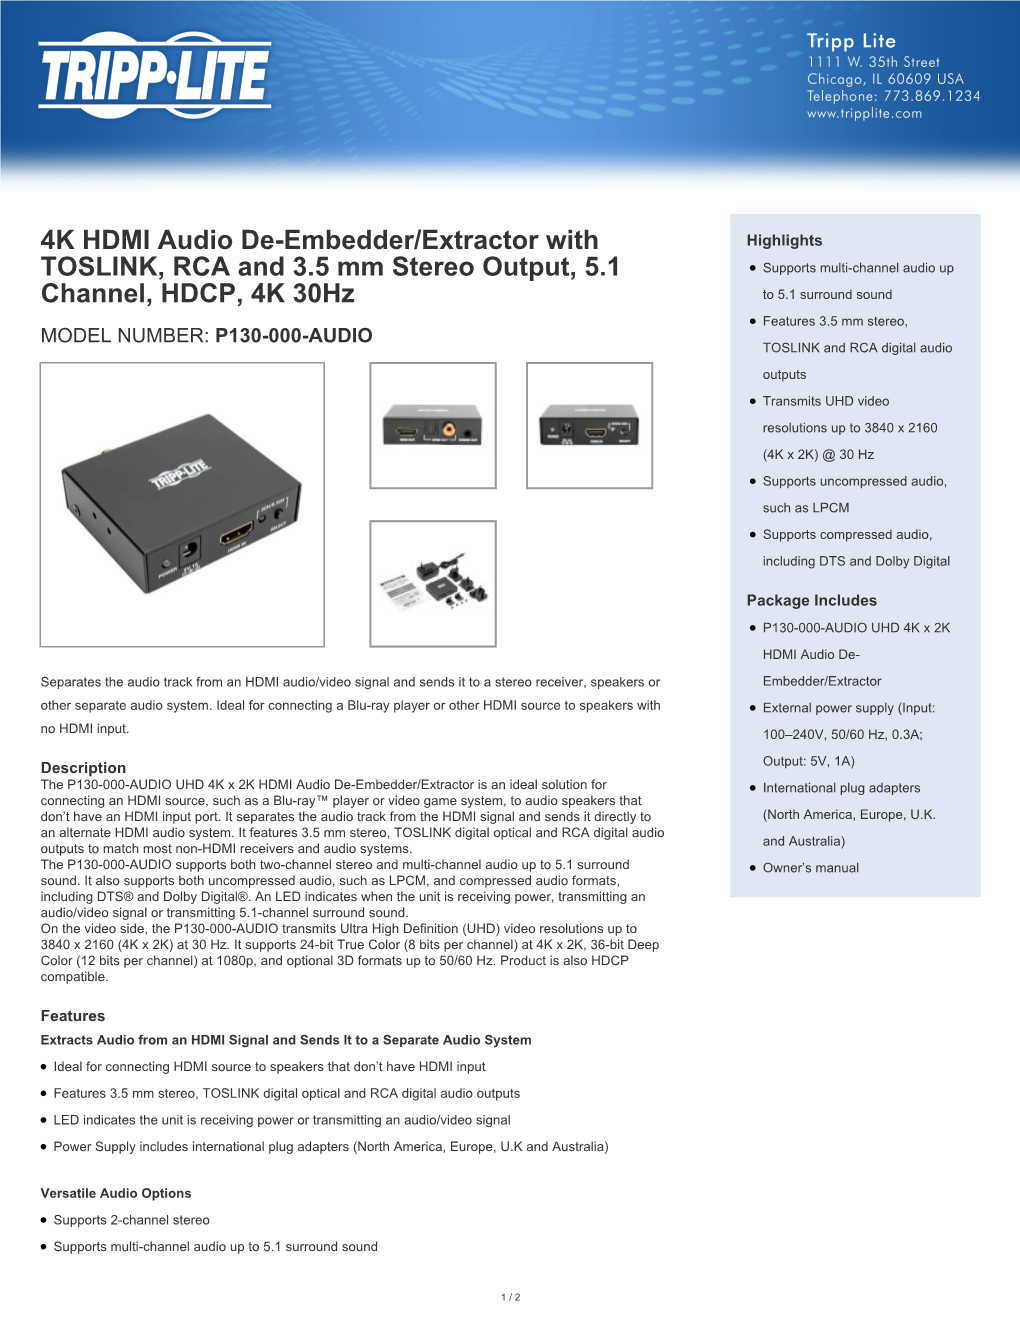 4K HDMI Audio De-Embedder/Extractor With